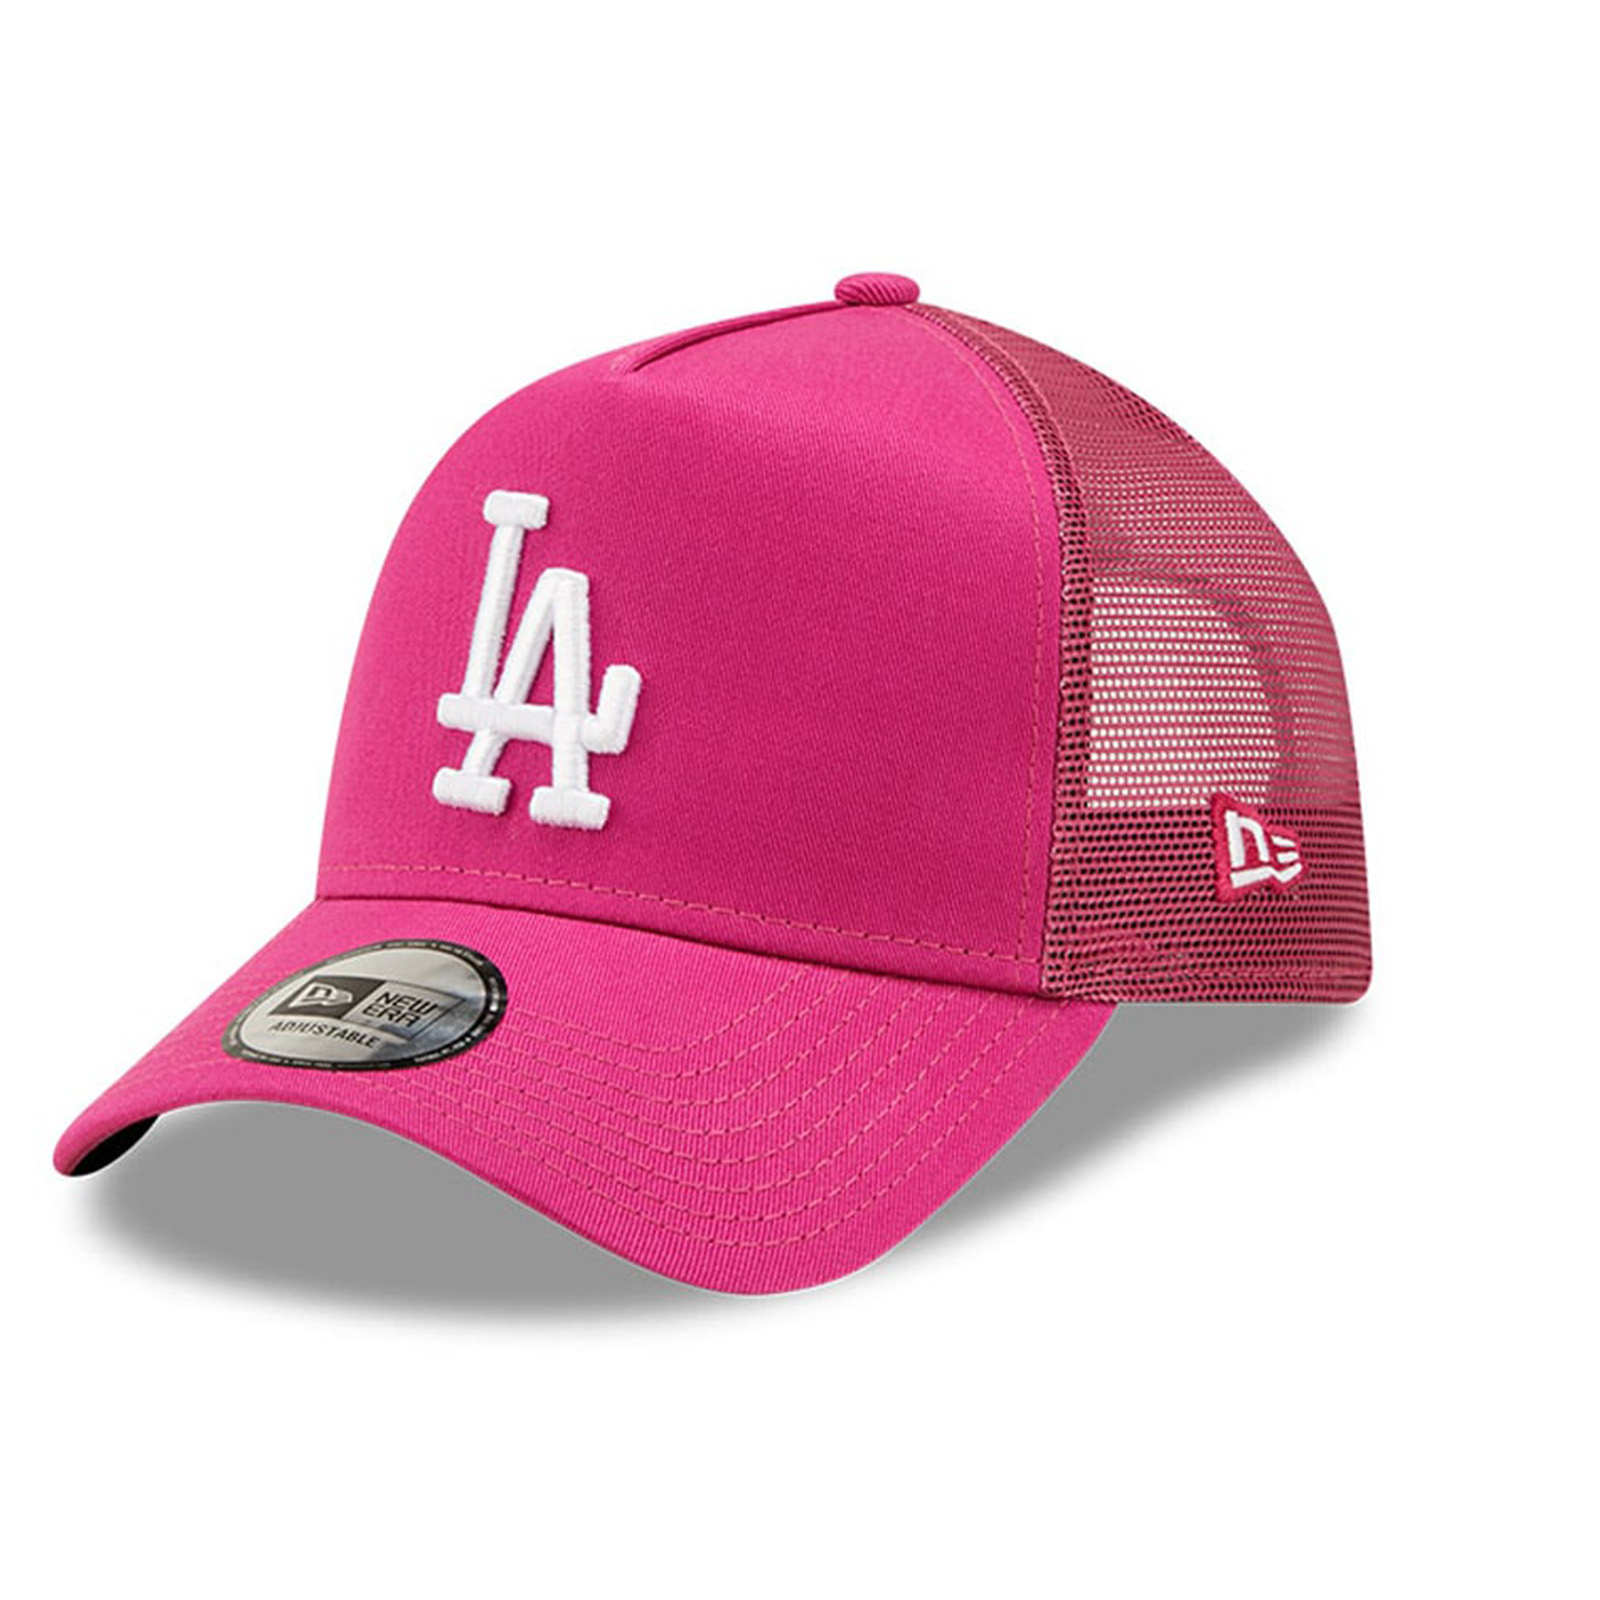 Dodgers Categories: \\ Cap A-Frame Policy \\ Era Era #Marki Trucker LA Pink Mesh \\ Brands \\ | Tonal Cookie 4 - New New Accessories